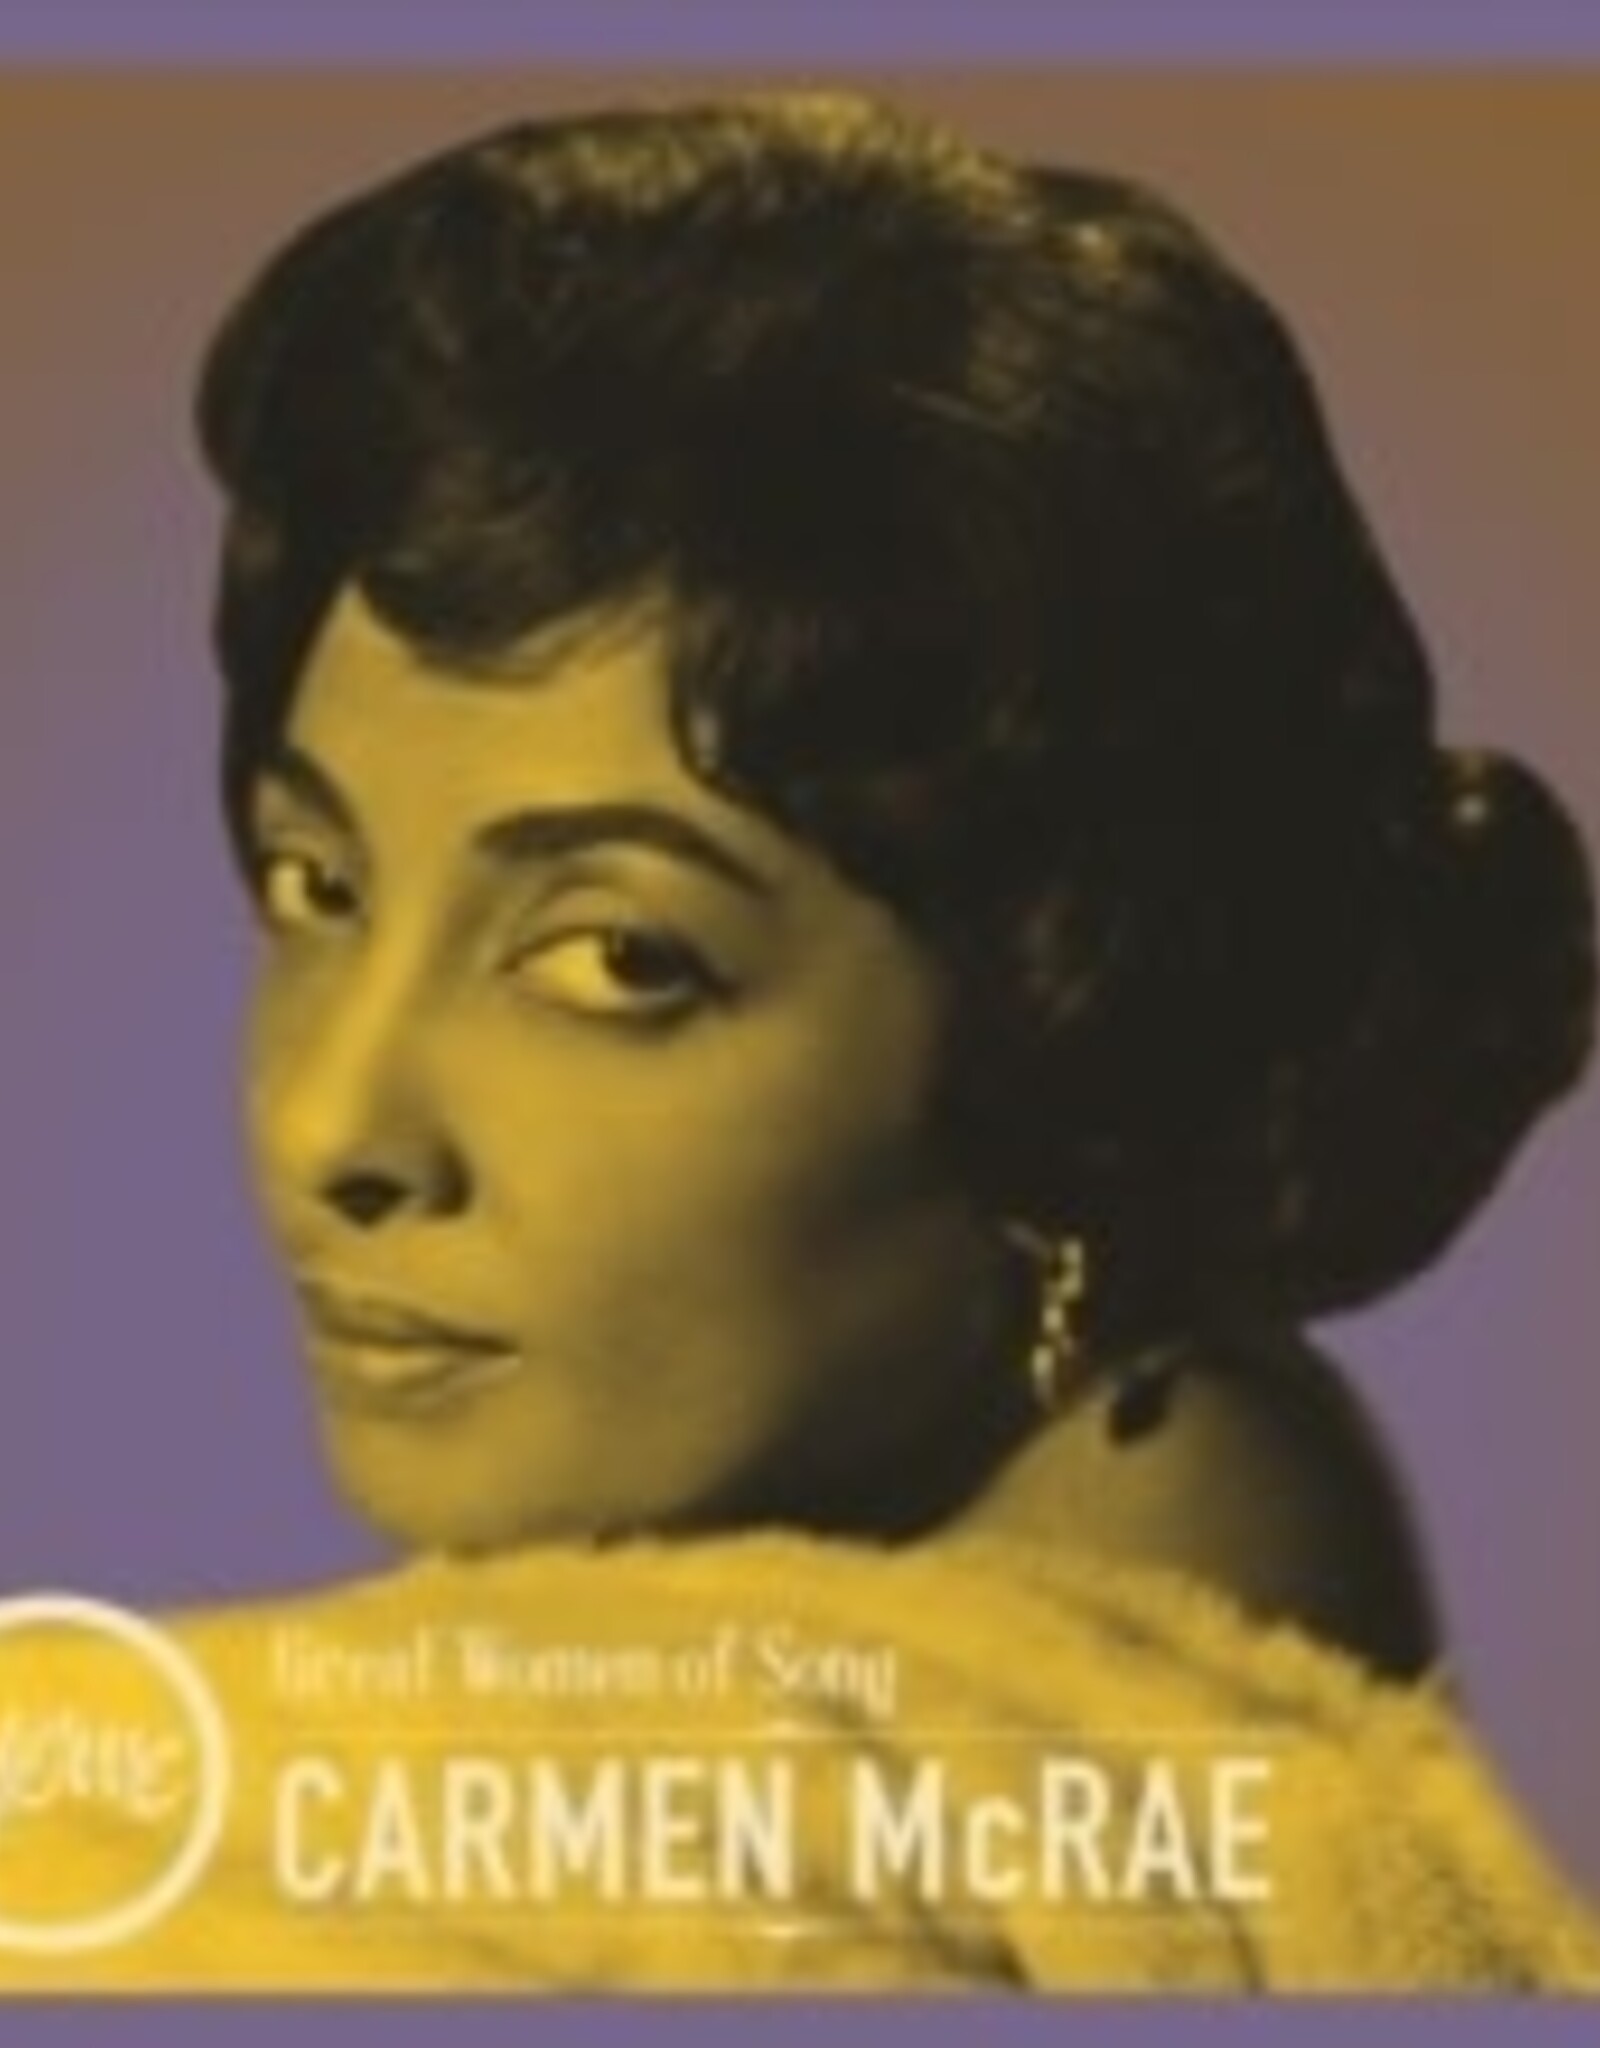 Carmen Mcrae - Great Women Of Song